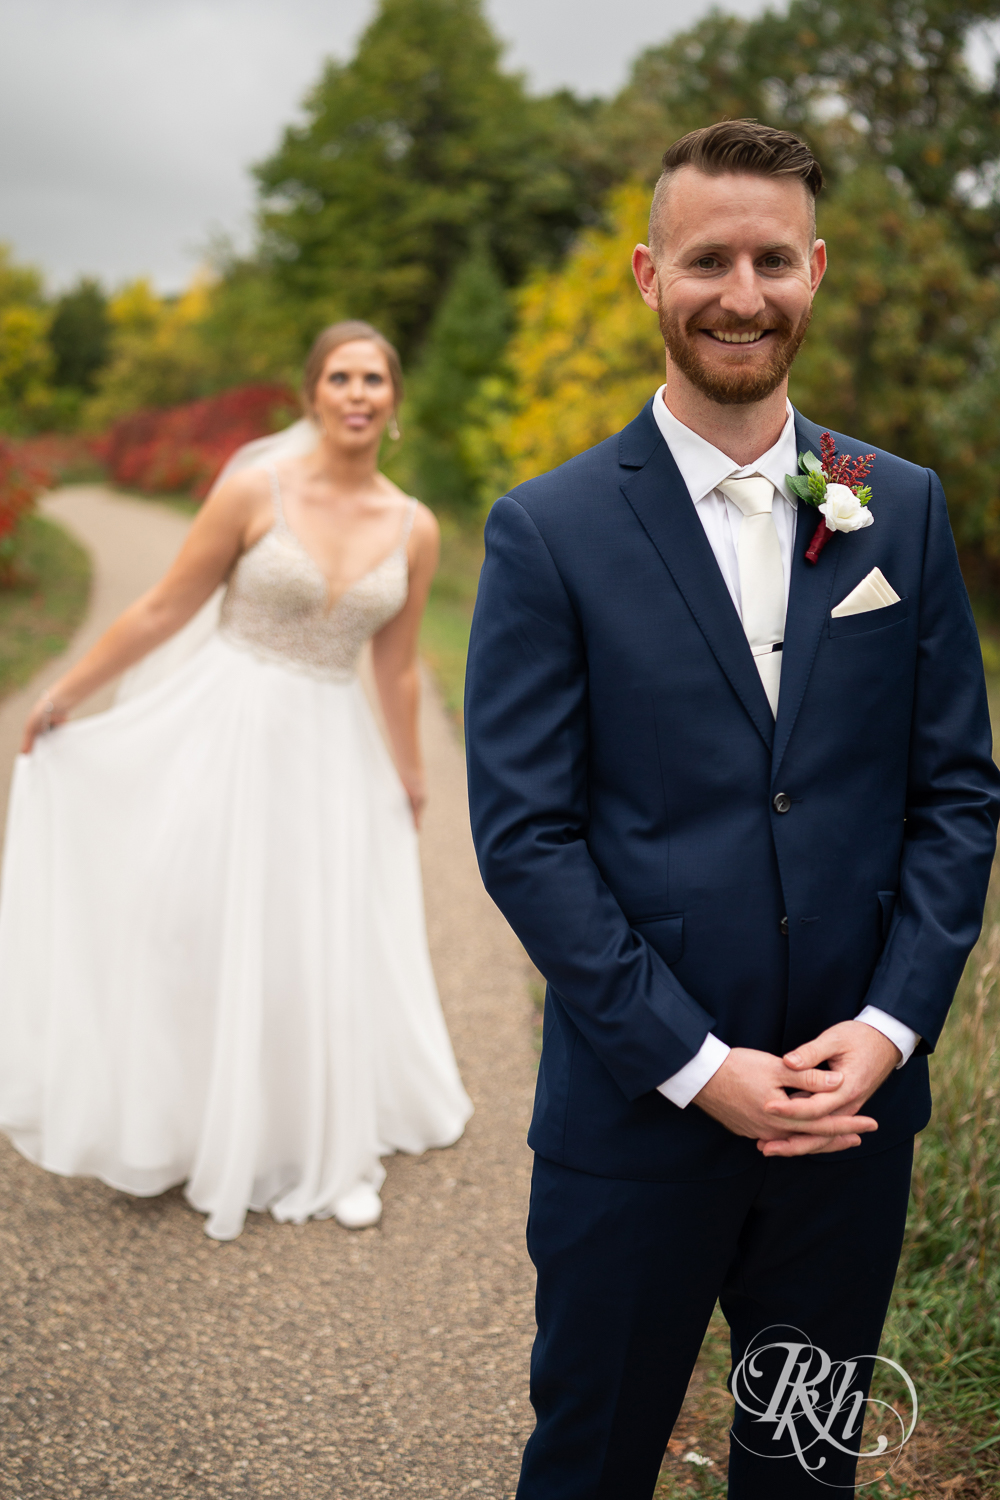 First look between bride and groom at Schaar's Bluff in Hastings, Minnesota. 